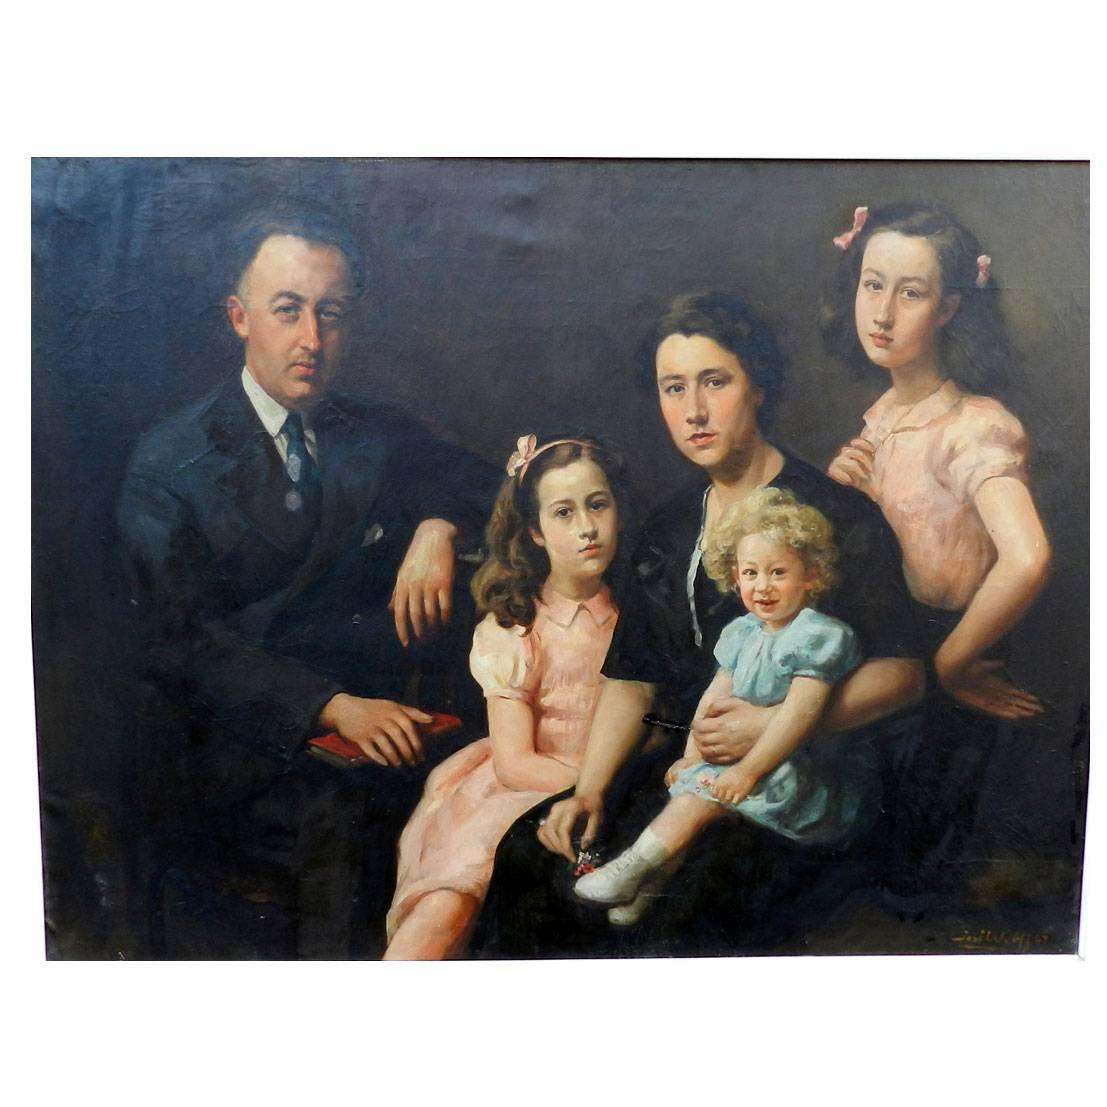 Jose Wolff, Familienporträt, großes Ölgemälde auf Leinwand, um 1947